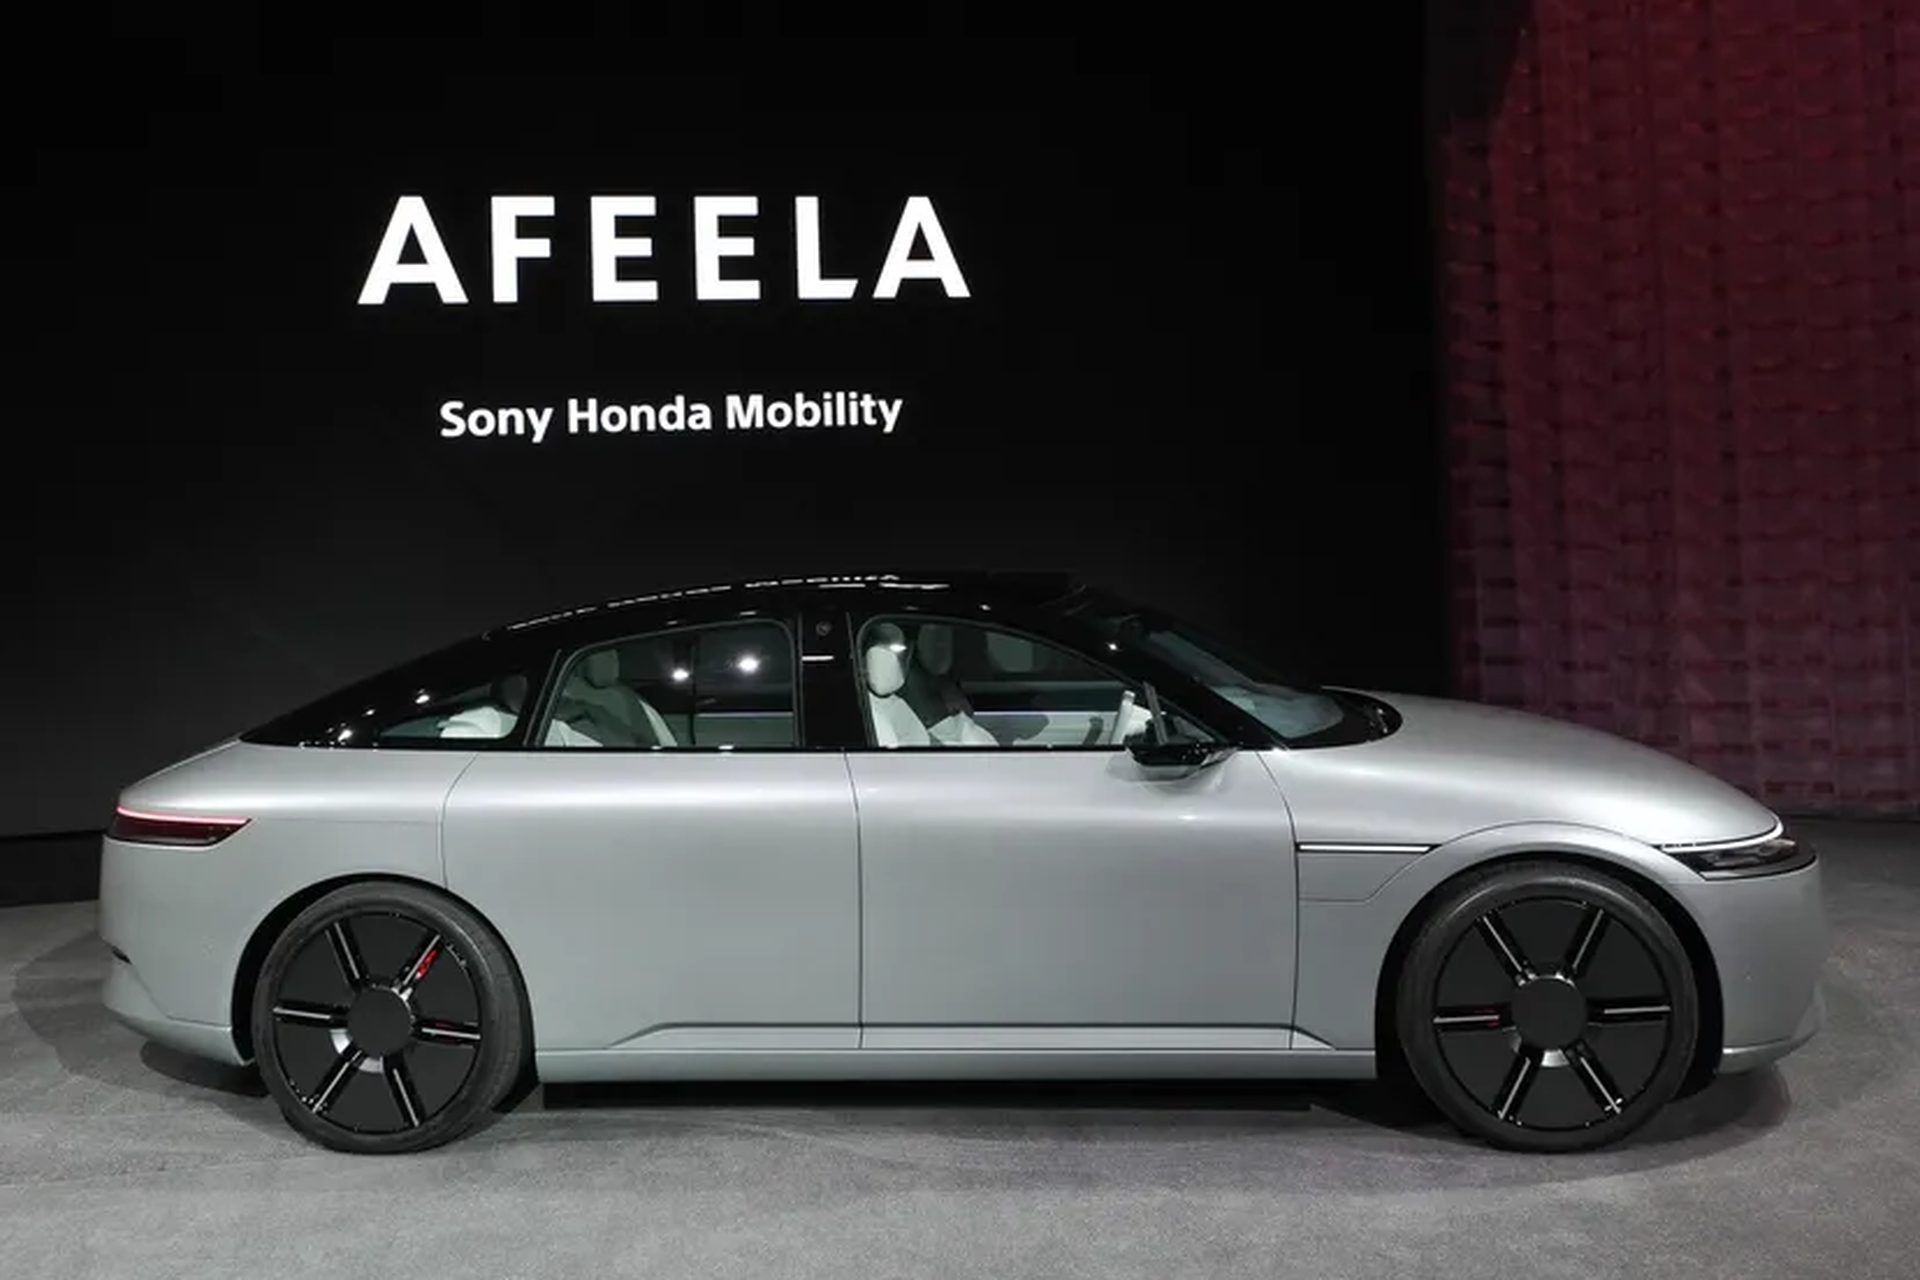 Presented by Honda and Sony: Afeela EV